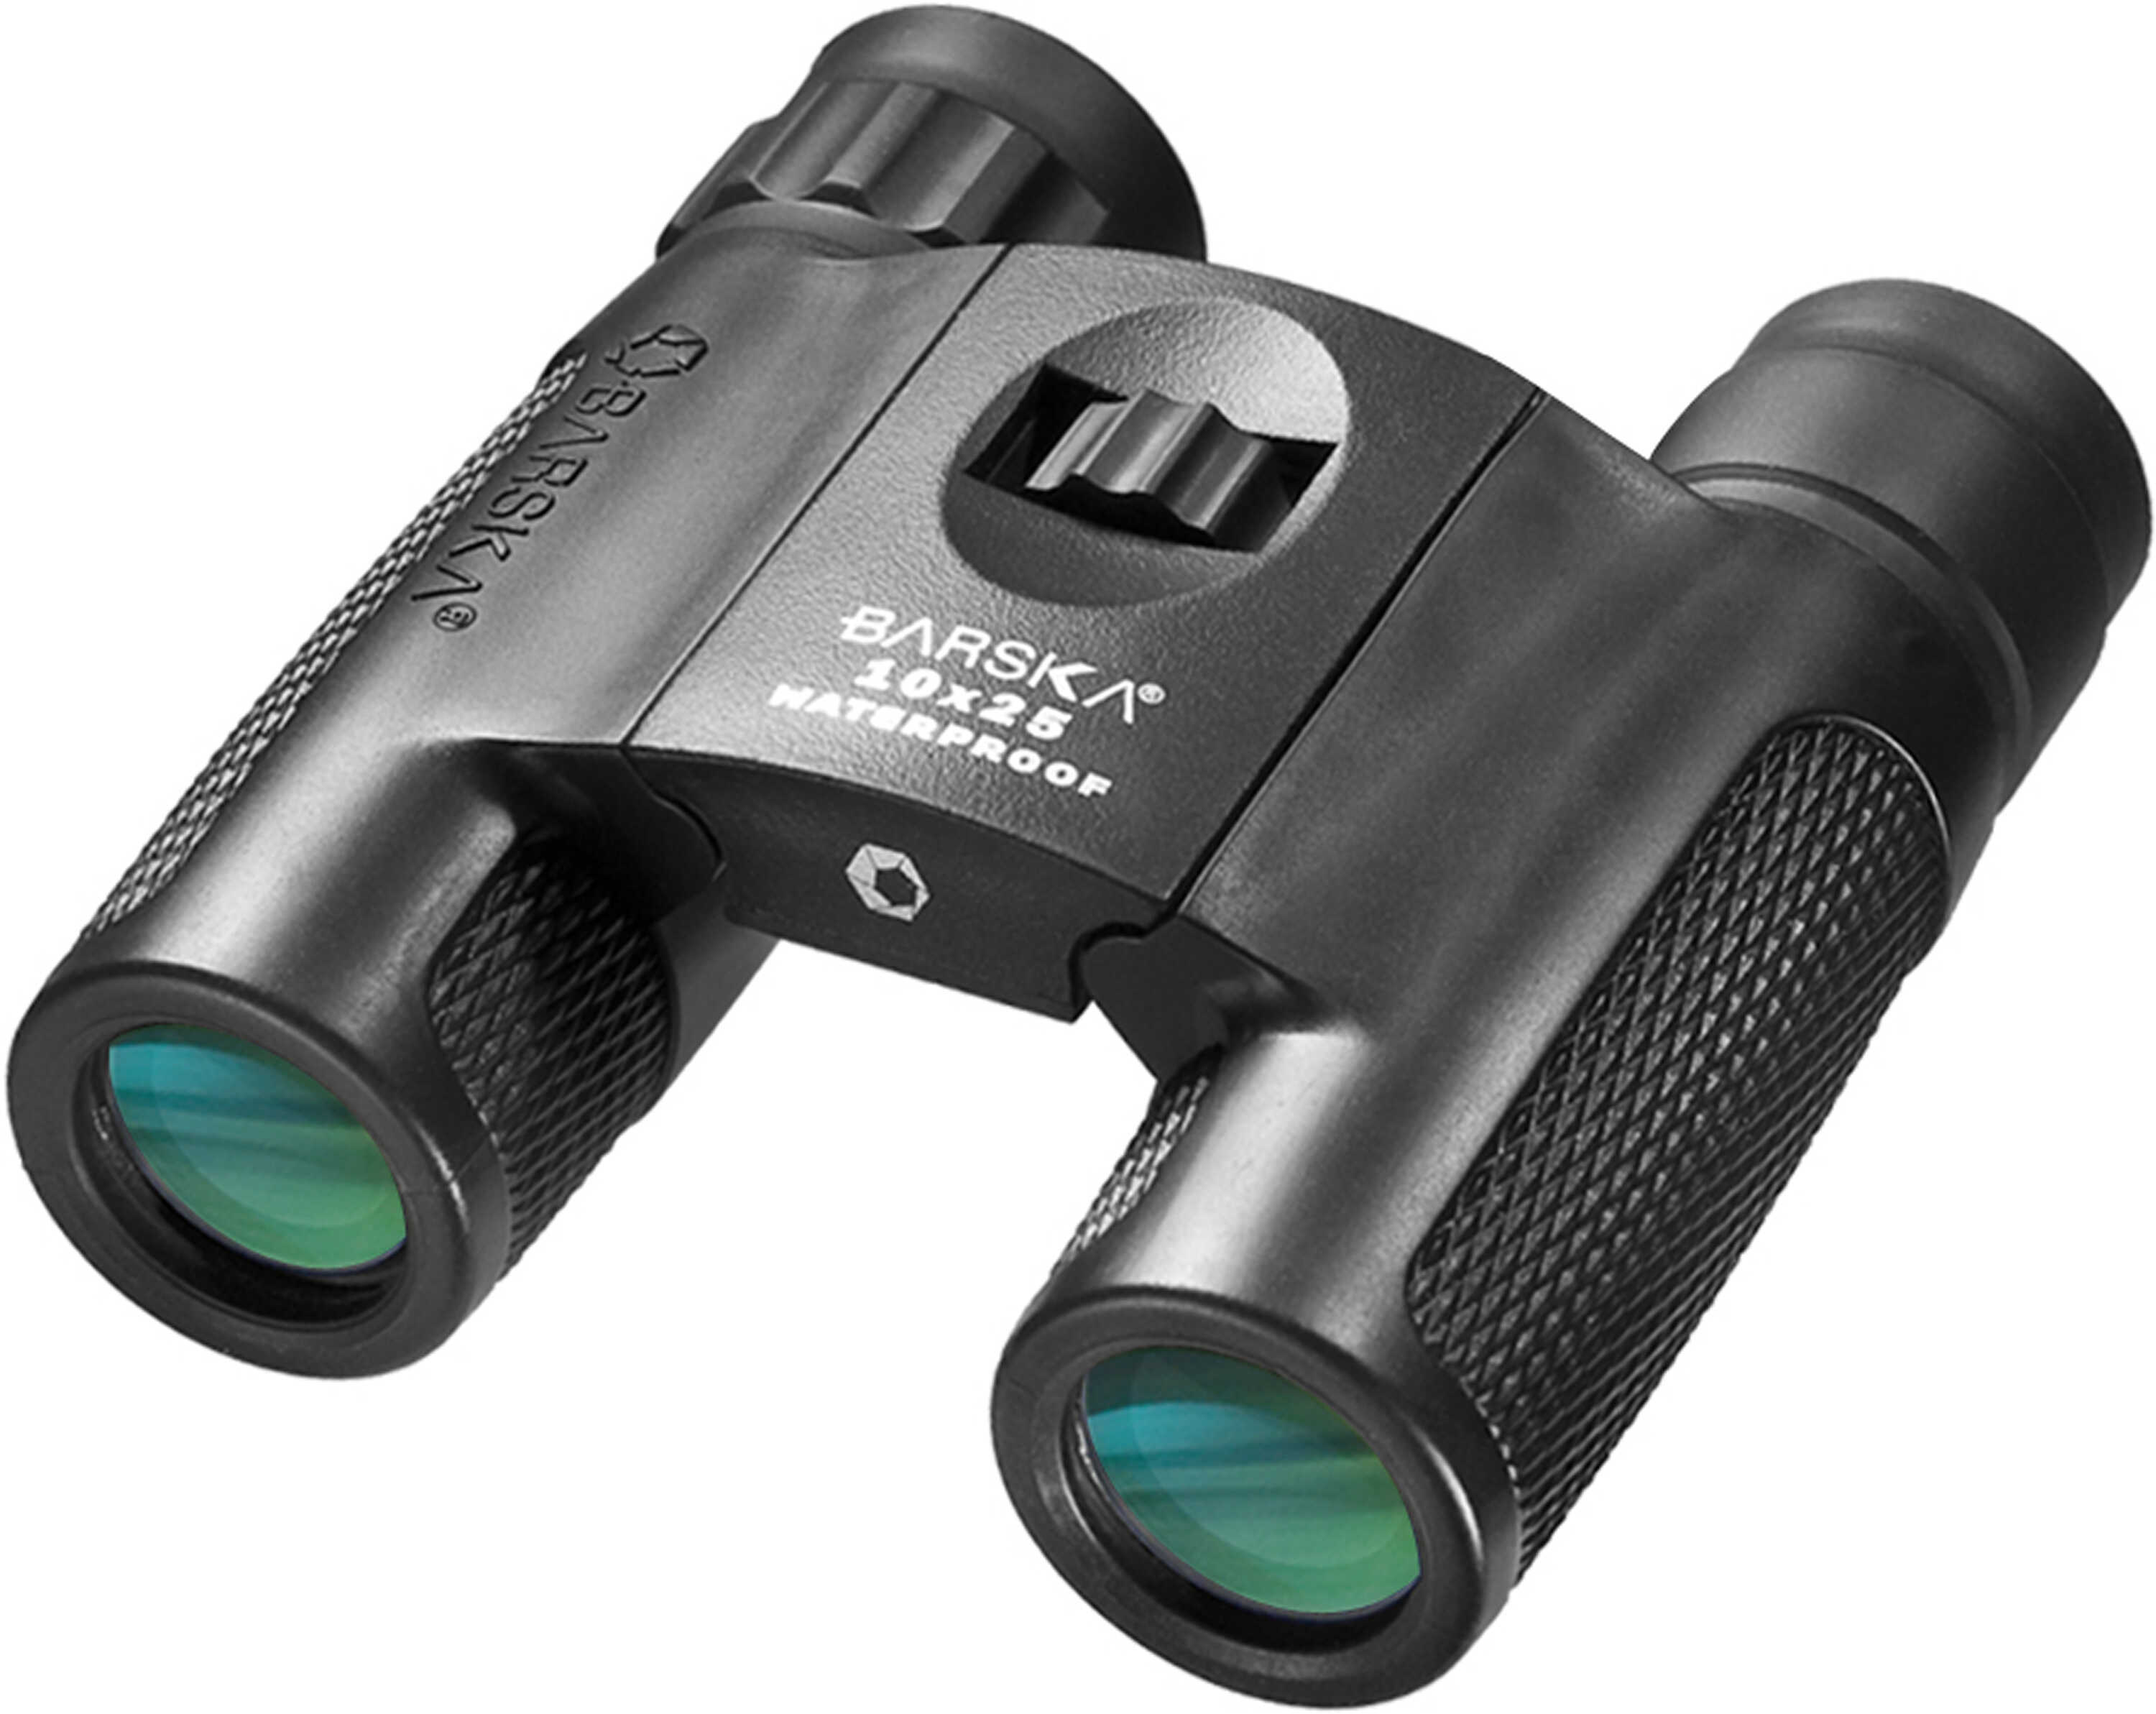 Barska Optics 10x25 WP Blackhawk Compact Green Lens Binoculars AB11844